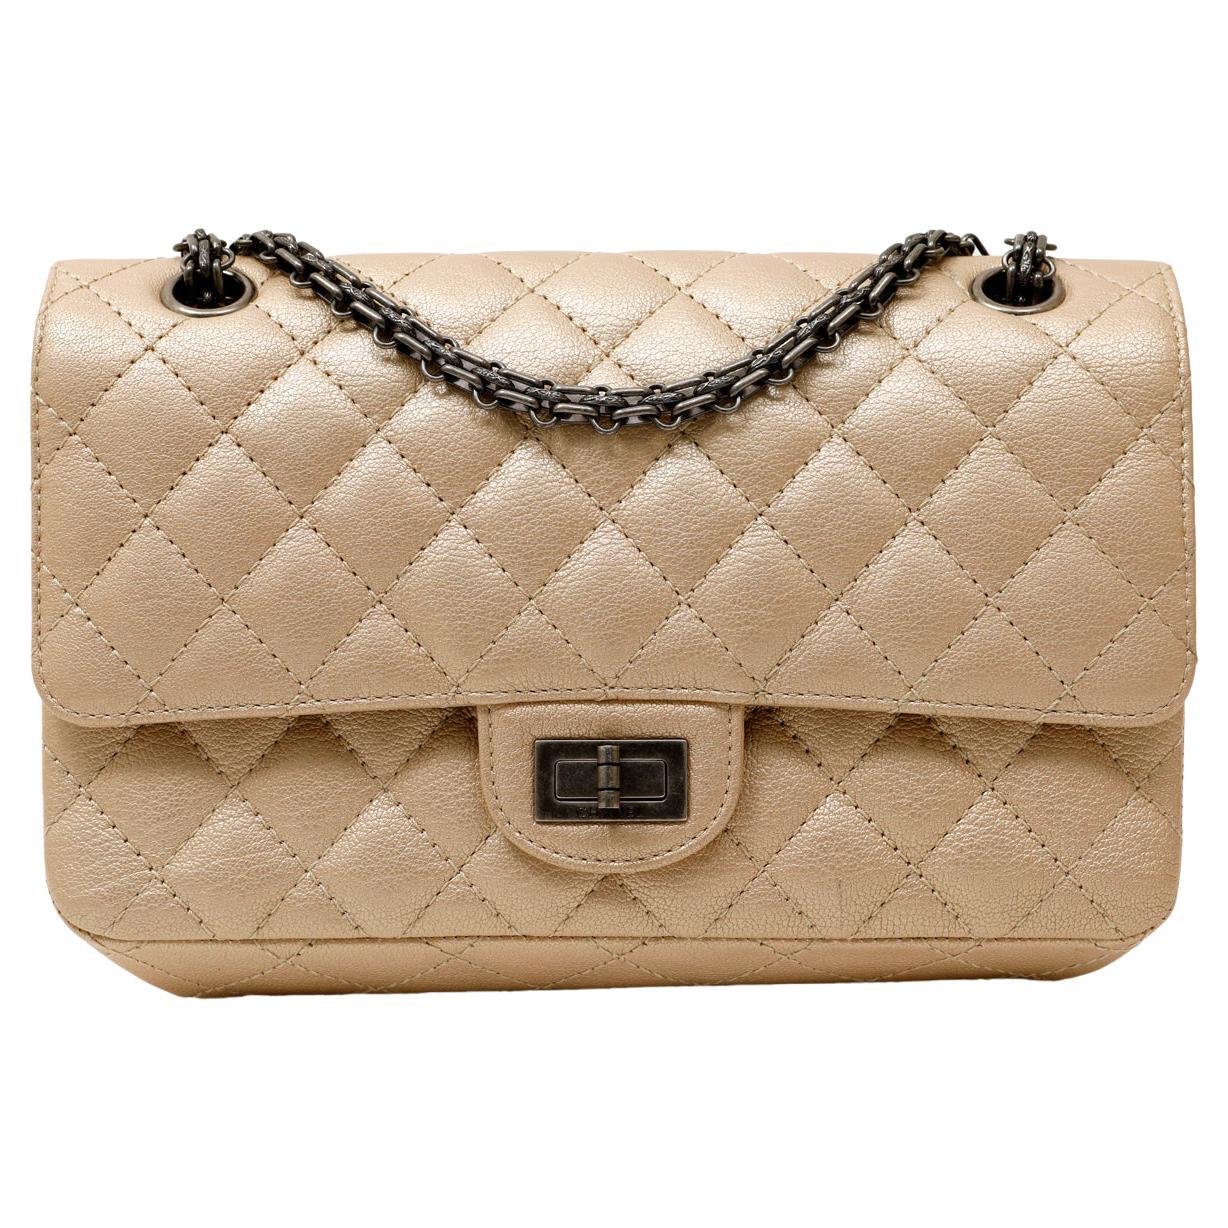 Chanel Metallic Beige Reissue Flap Bag